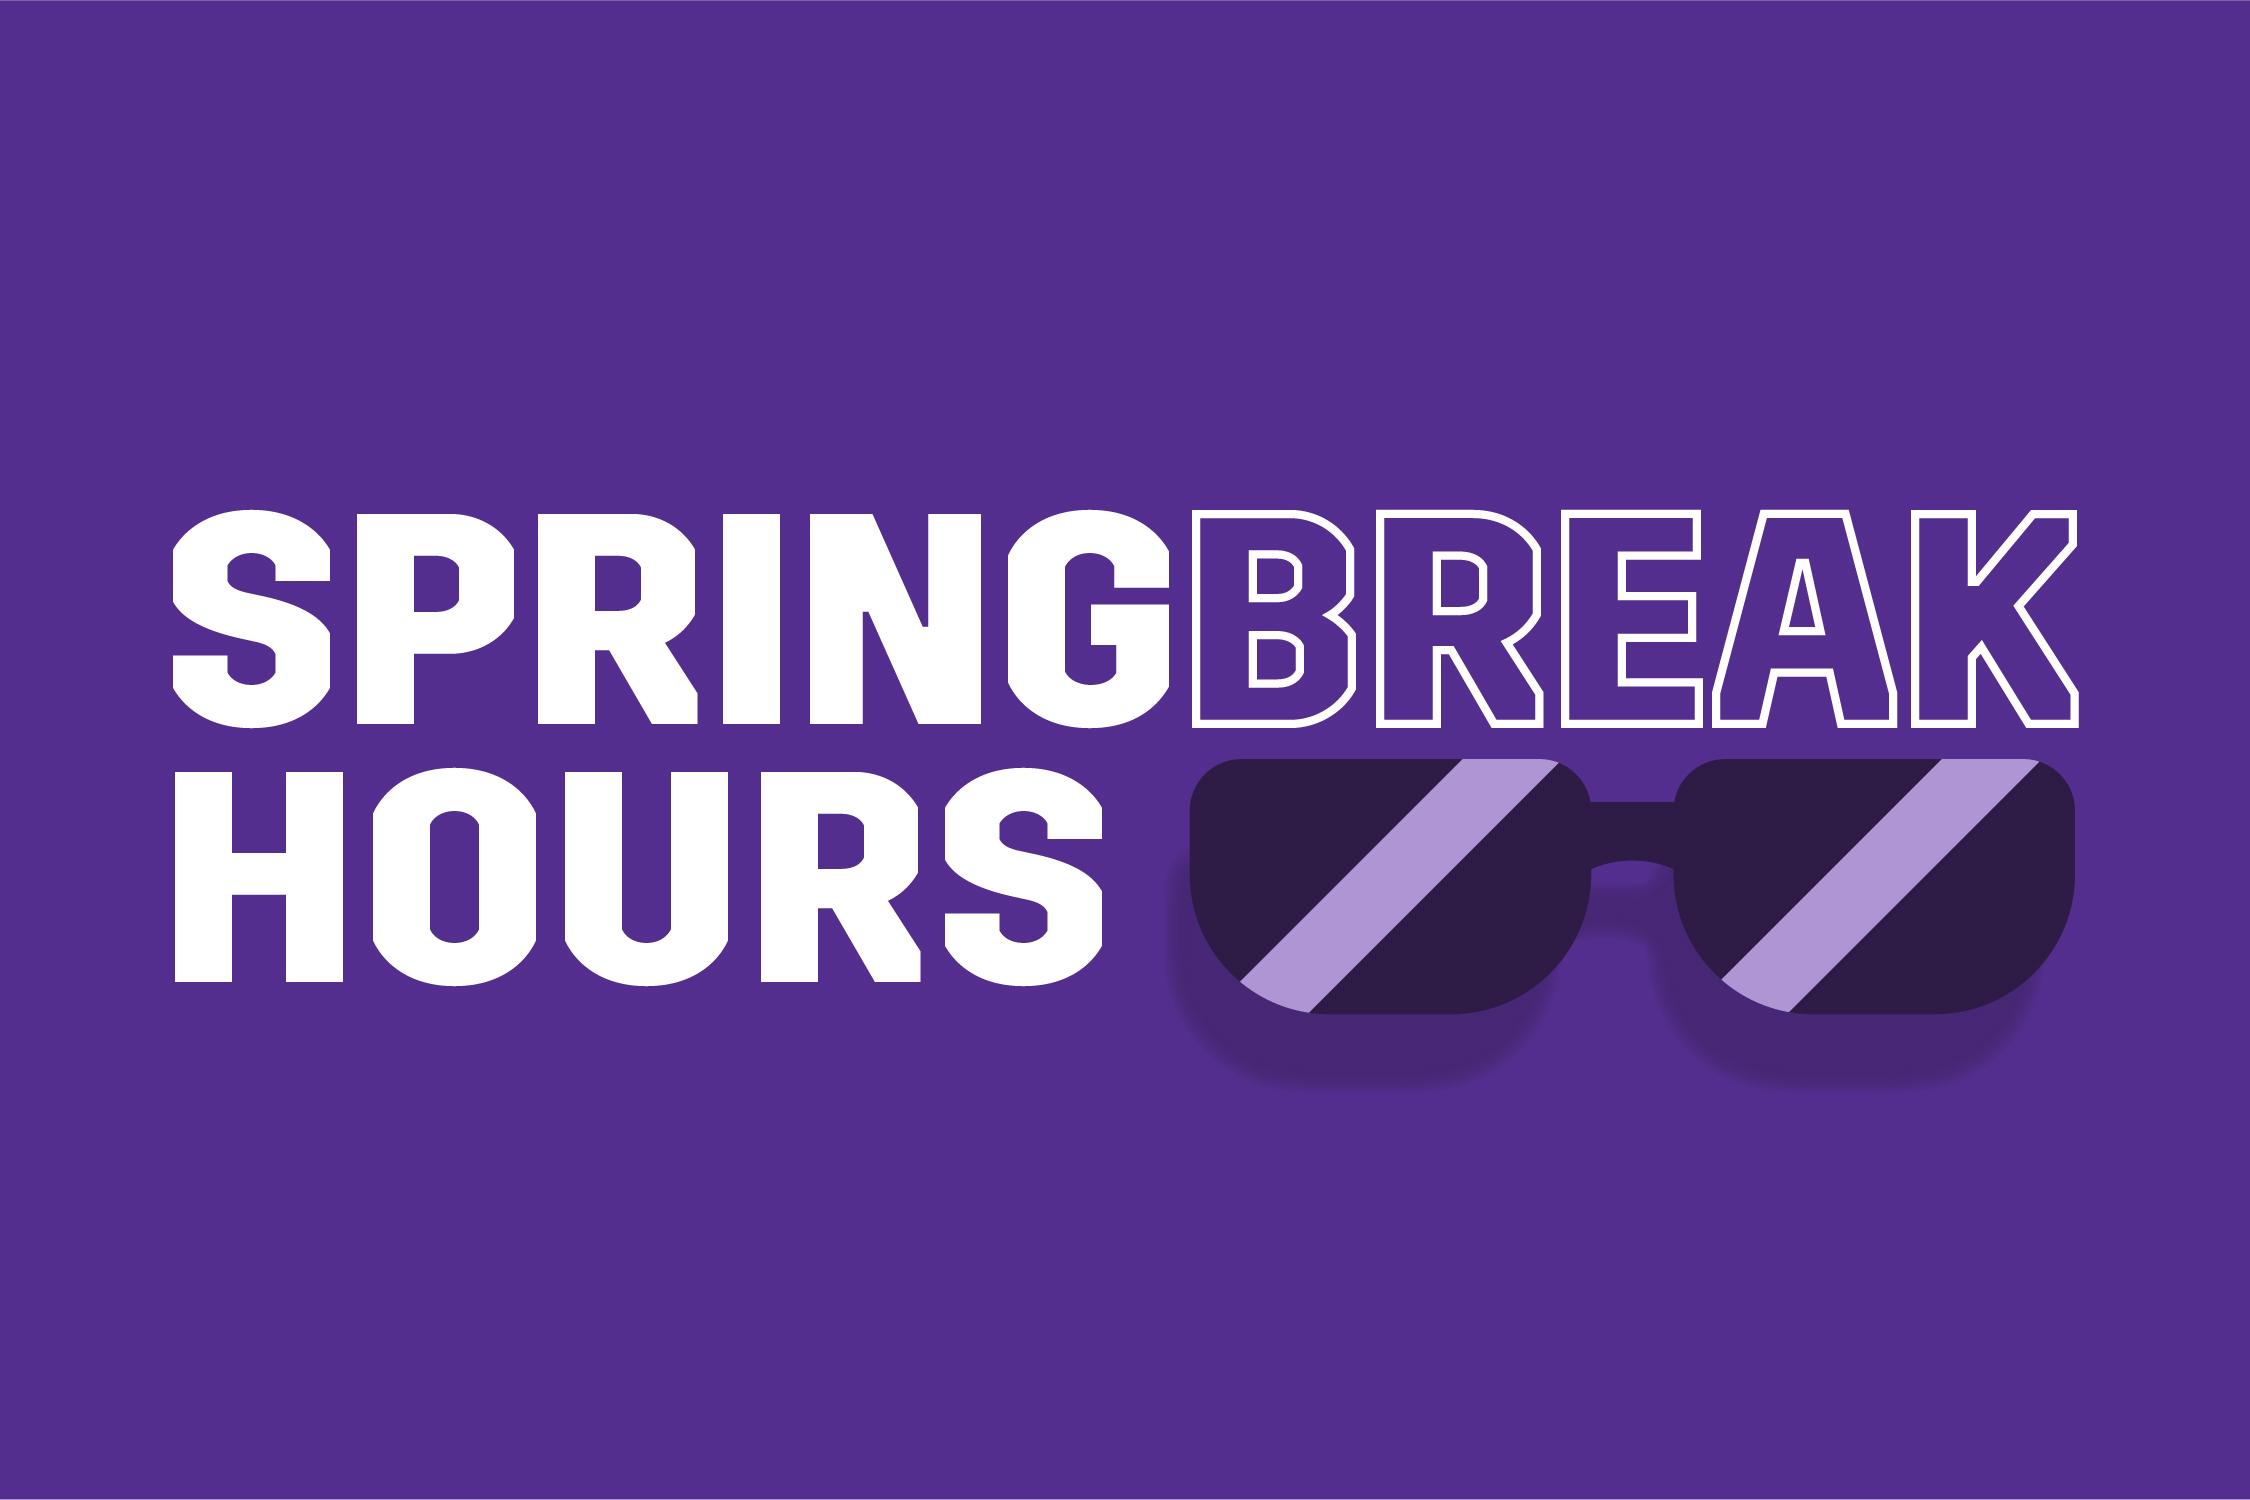 Spring break hours graphic